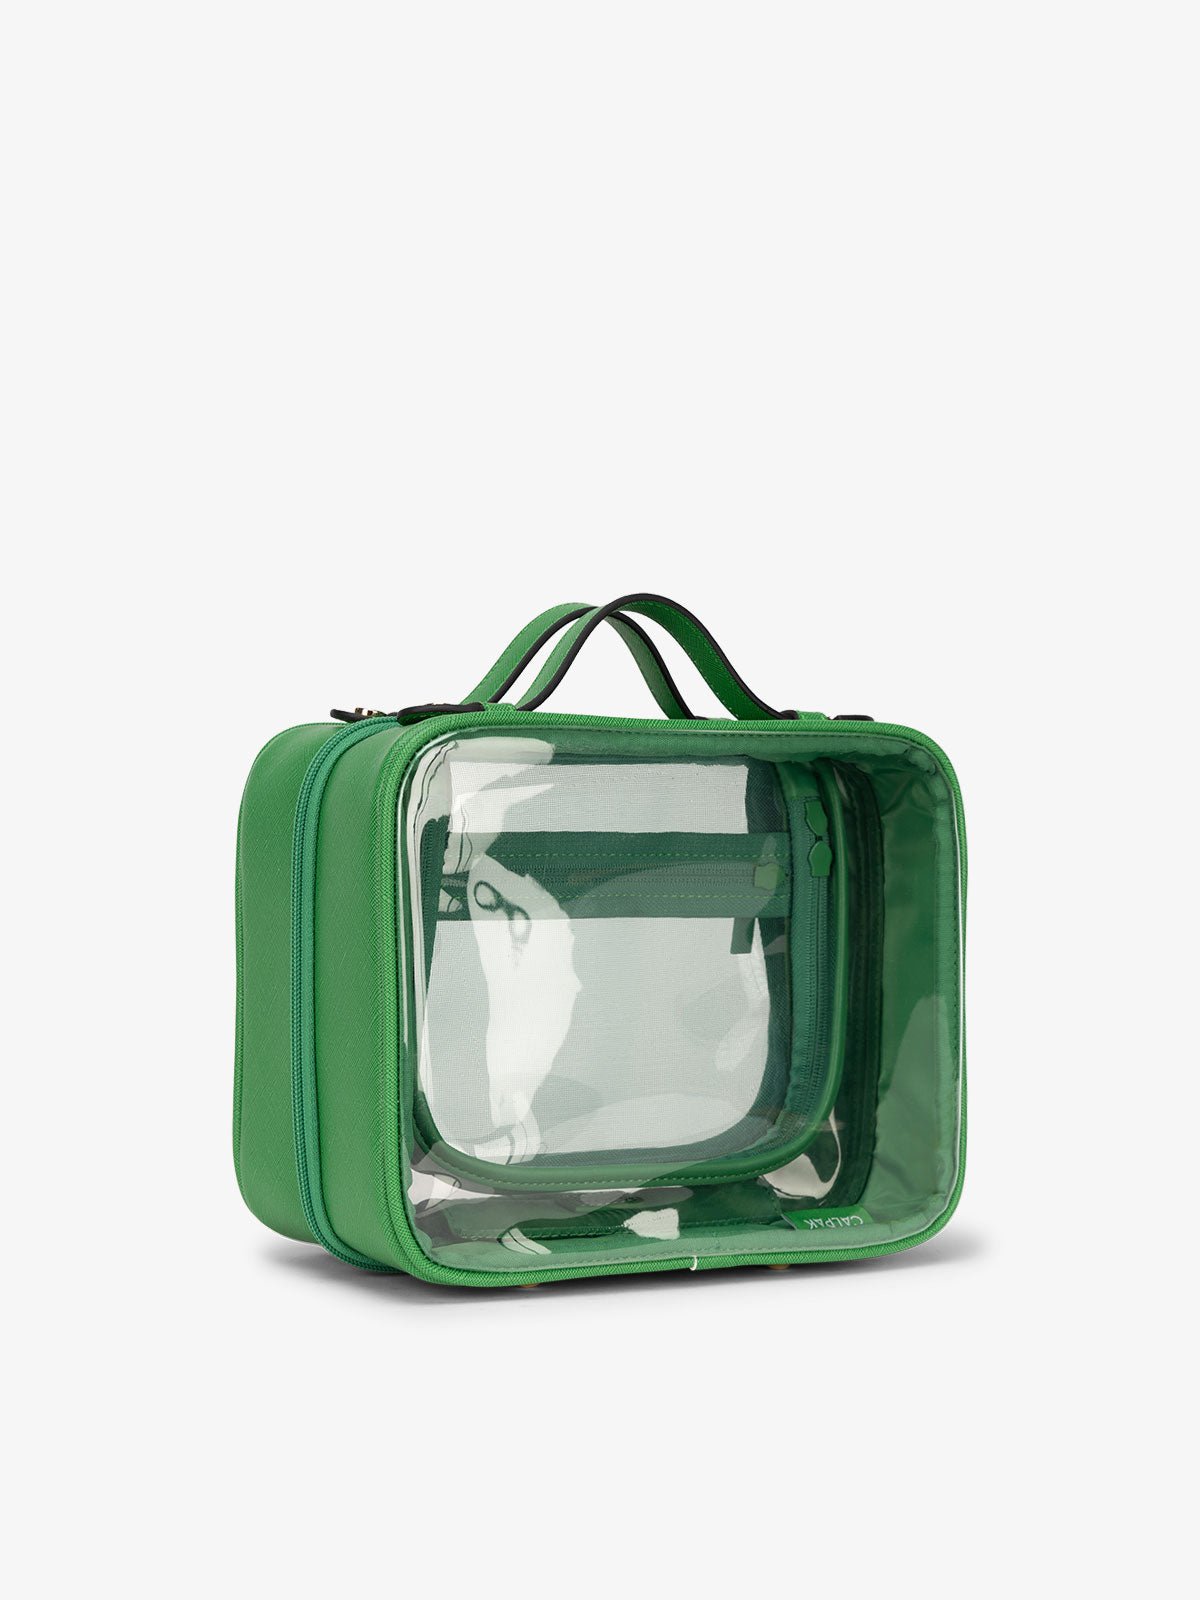 CALPAK clear makeup bag with top handles in green